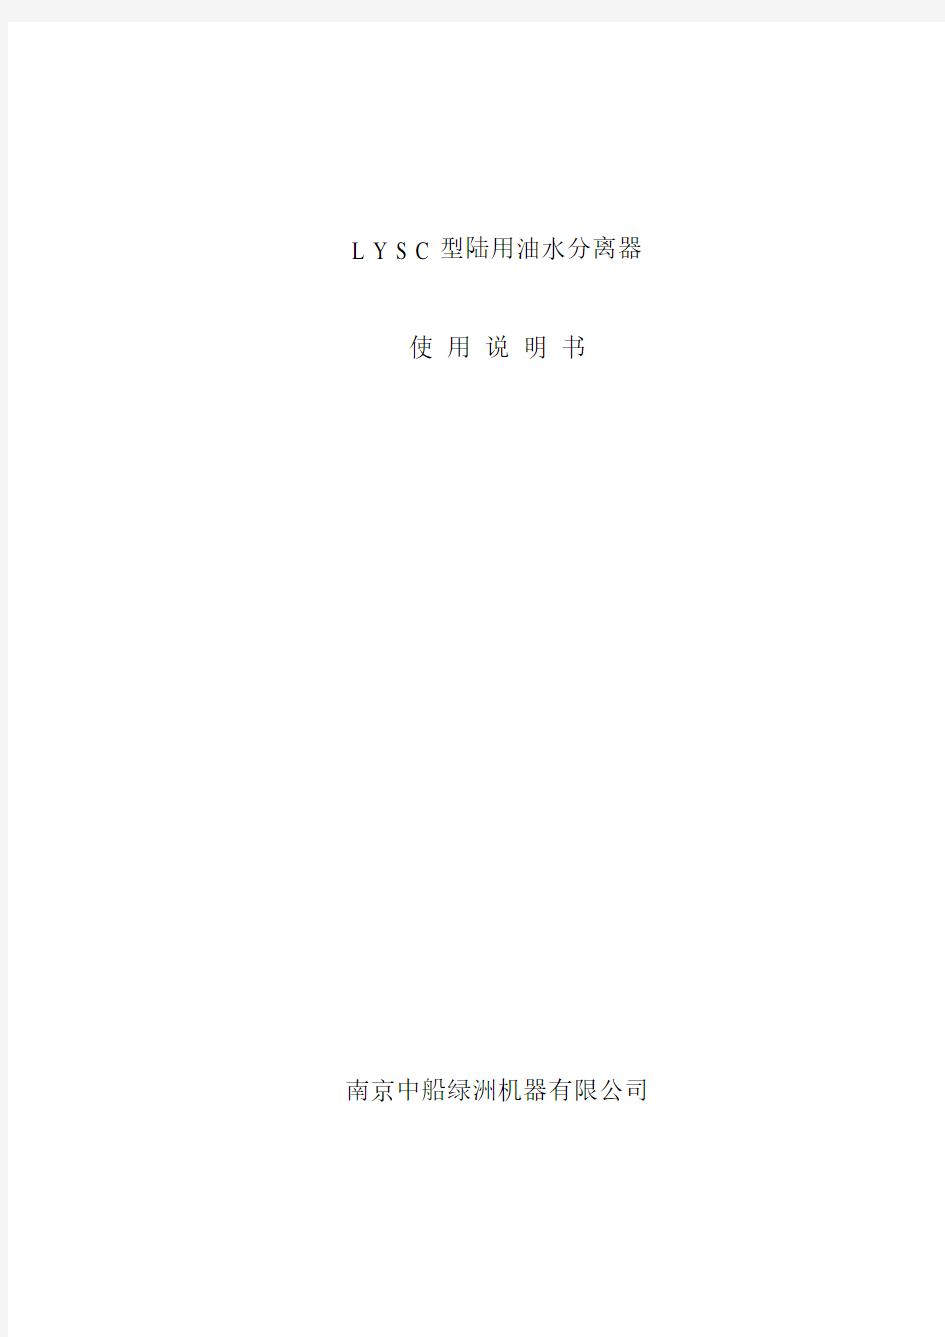 LYSC型系列陆用油水分离器说明书(中文)